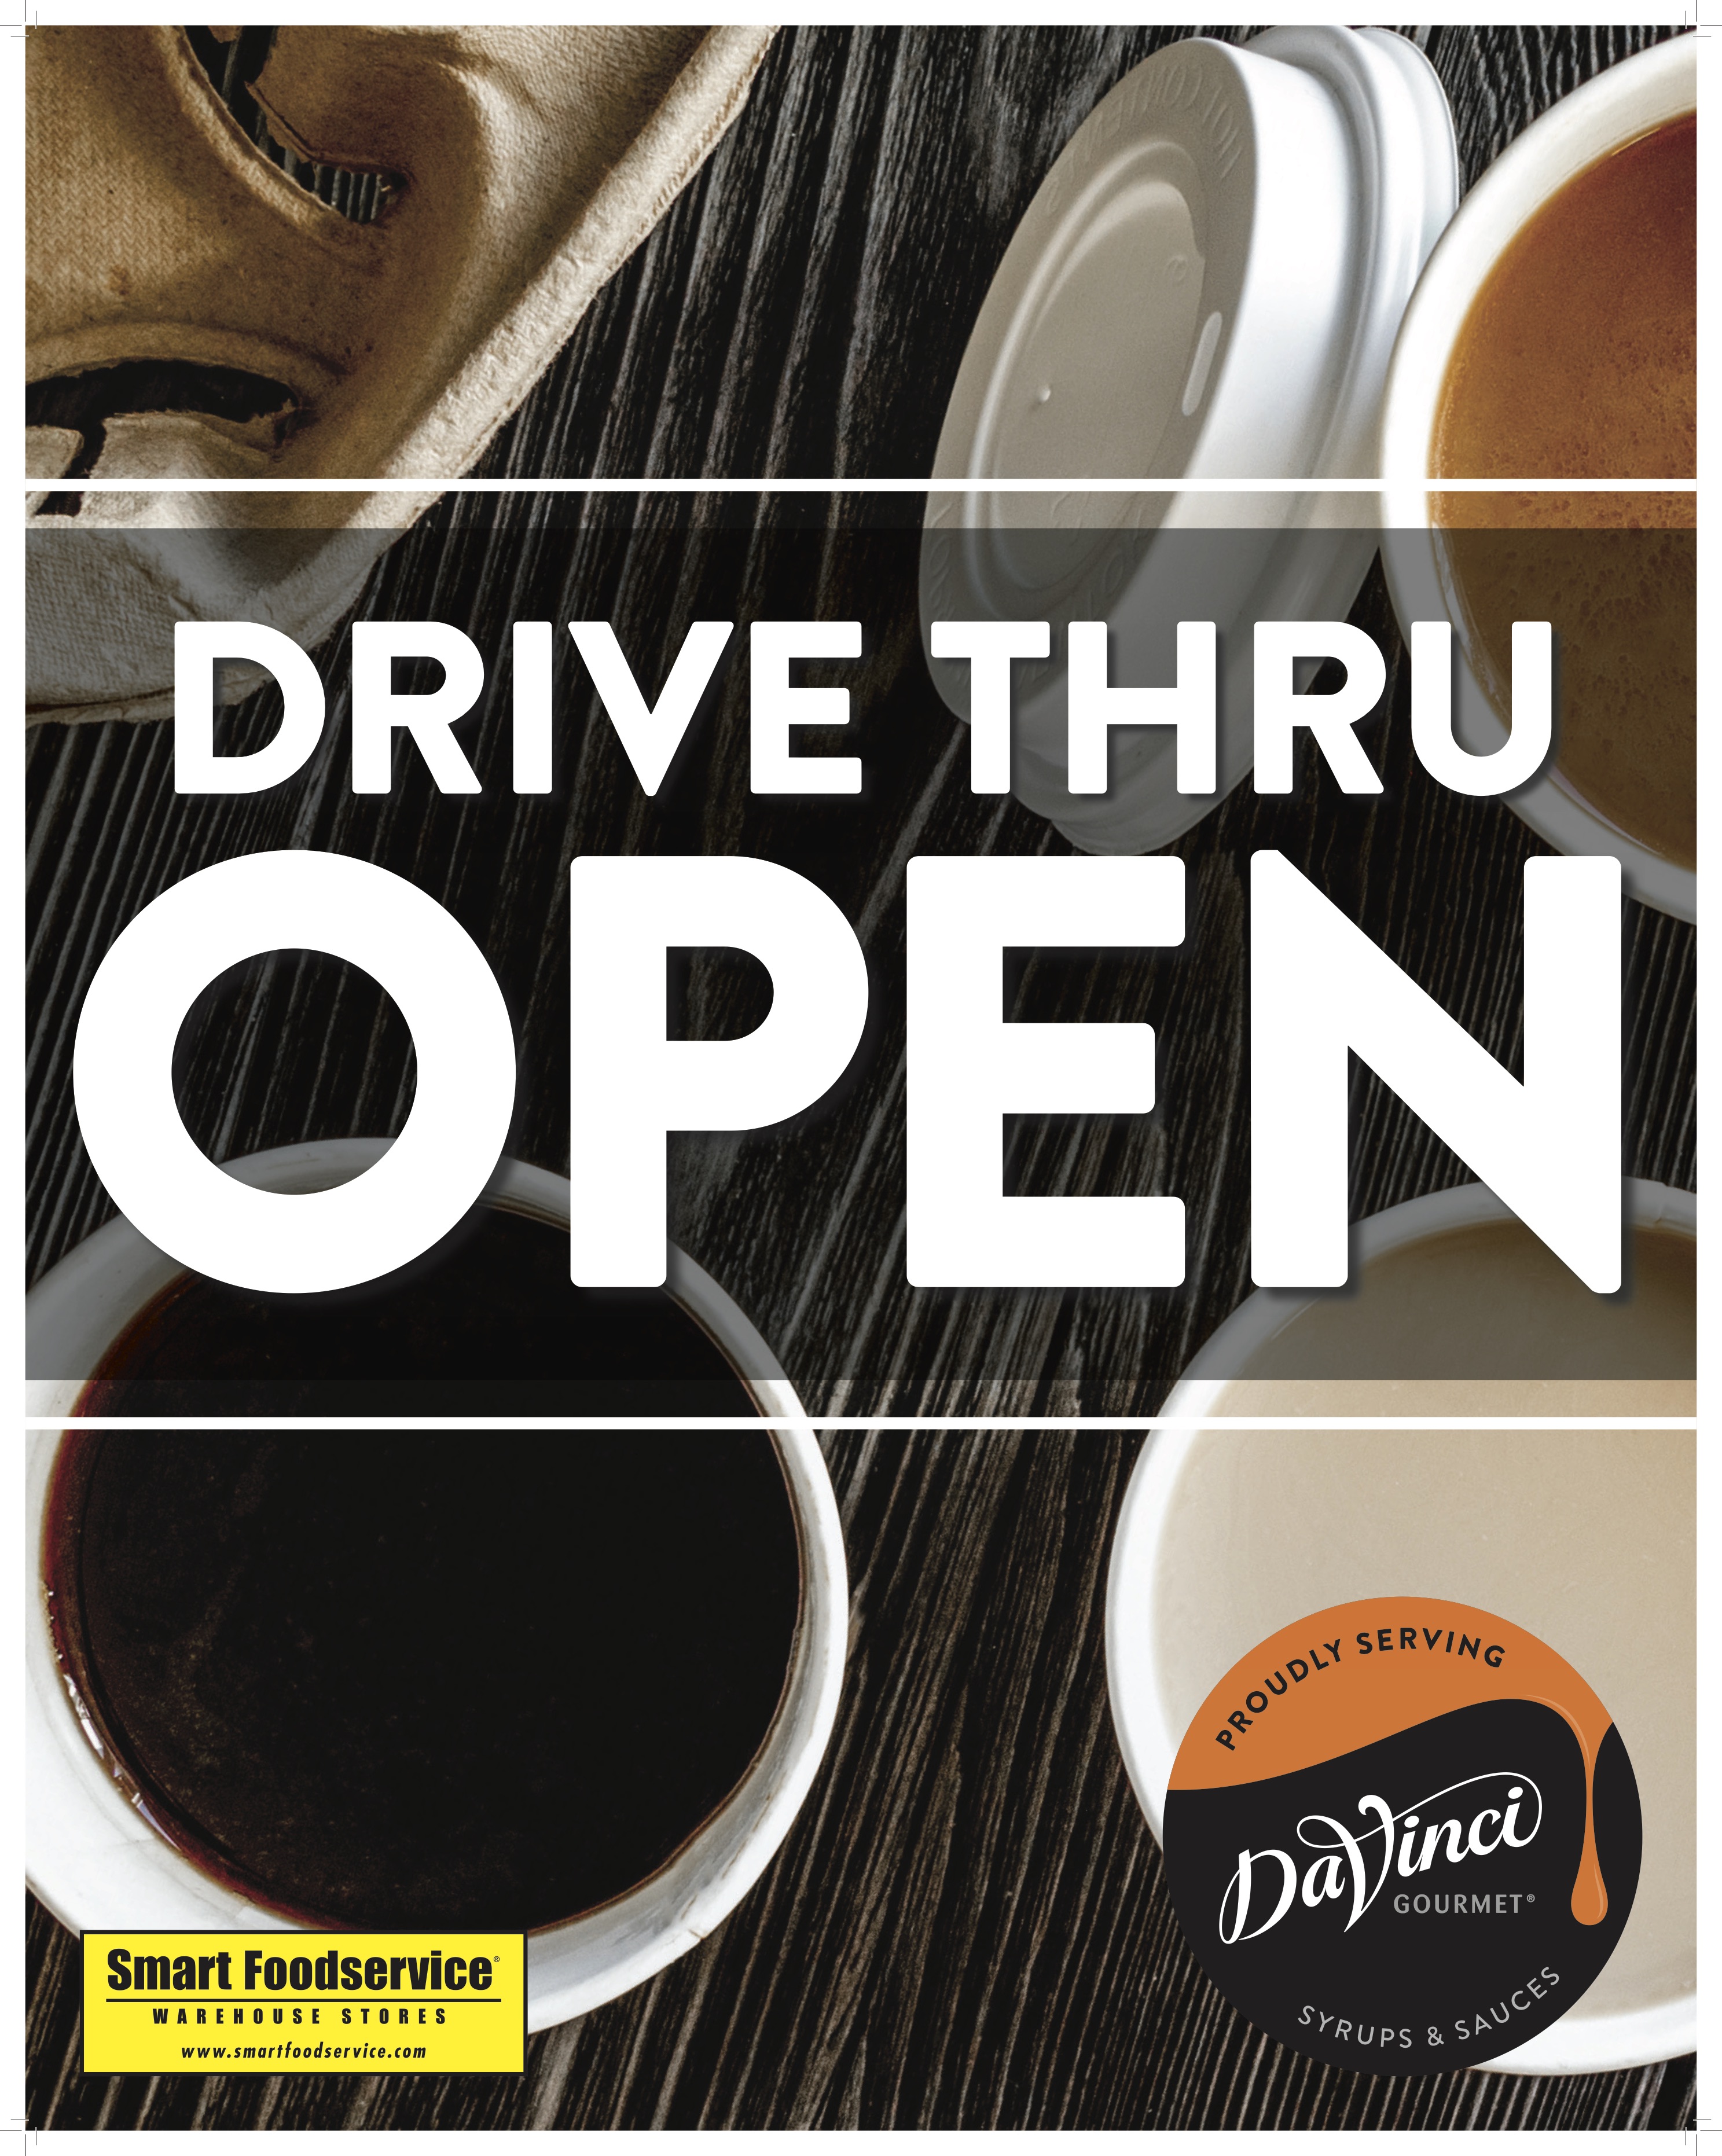 DaVinci Gourmet - Drive Thru Open 19x24